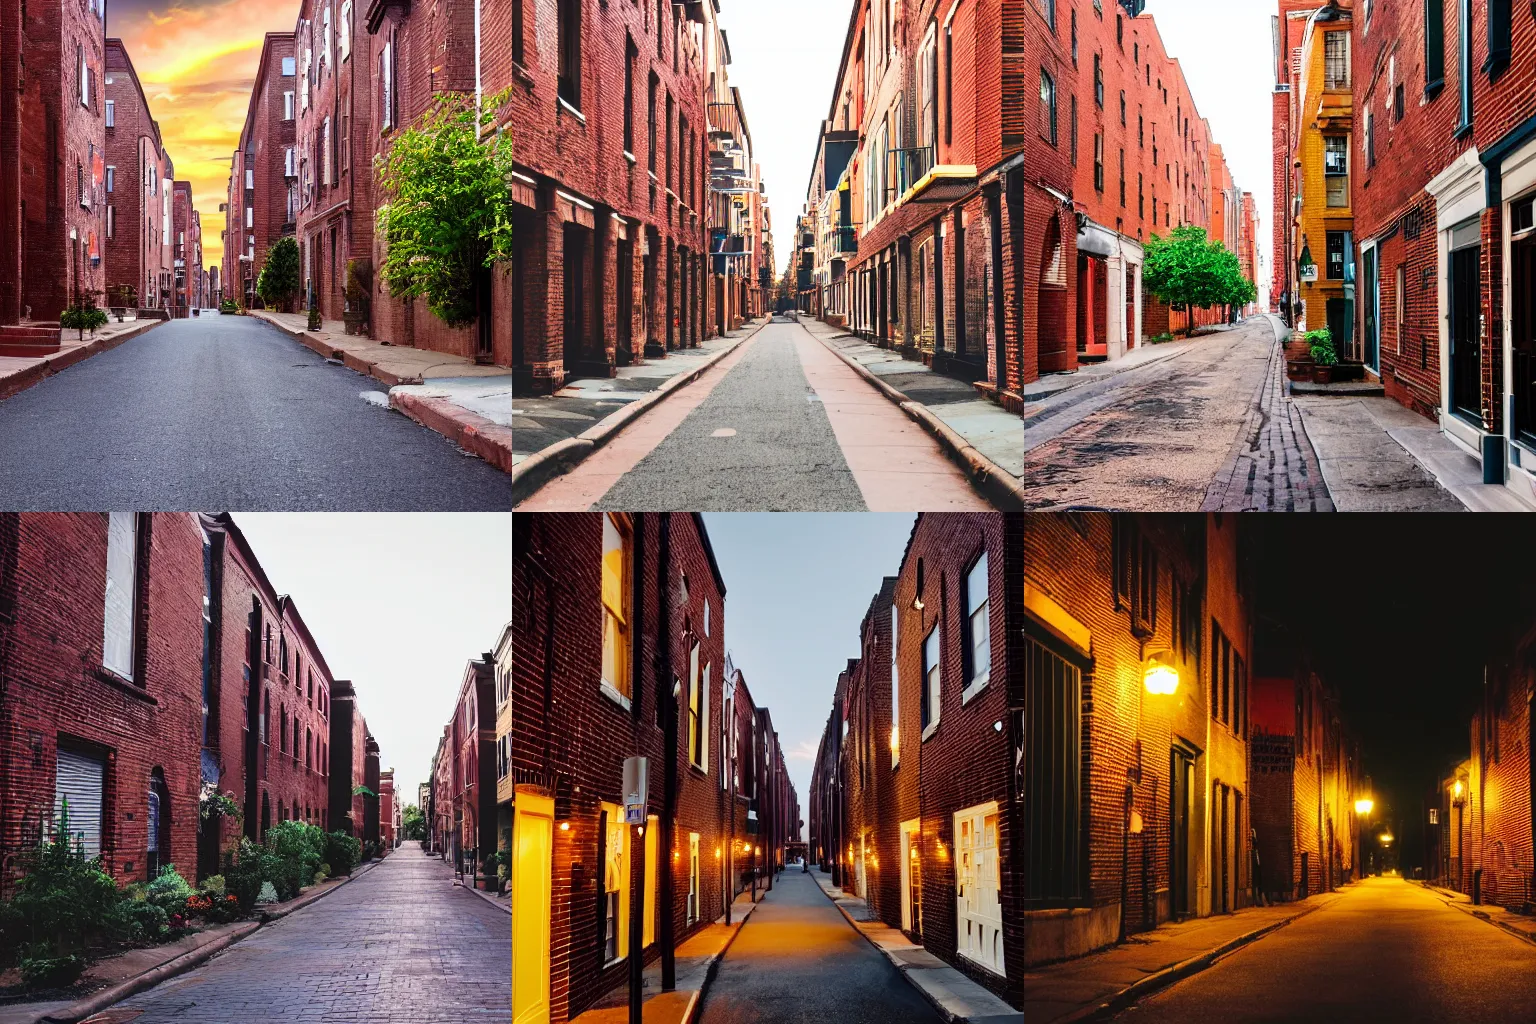 Prompt: A street in an underground town, brick houses, orange street lights